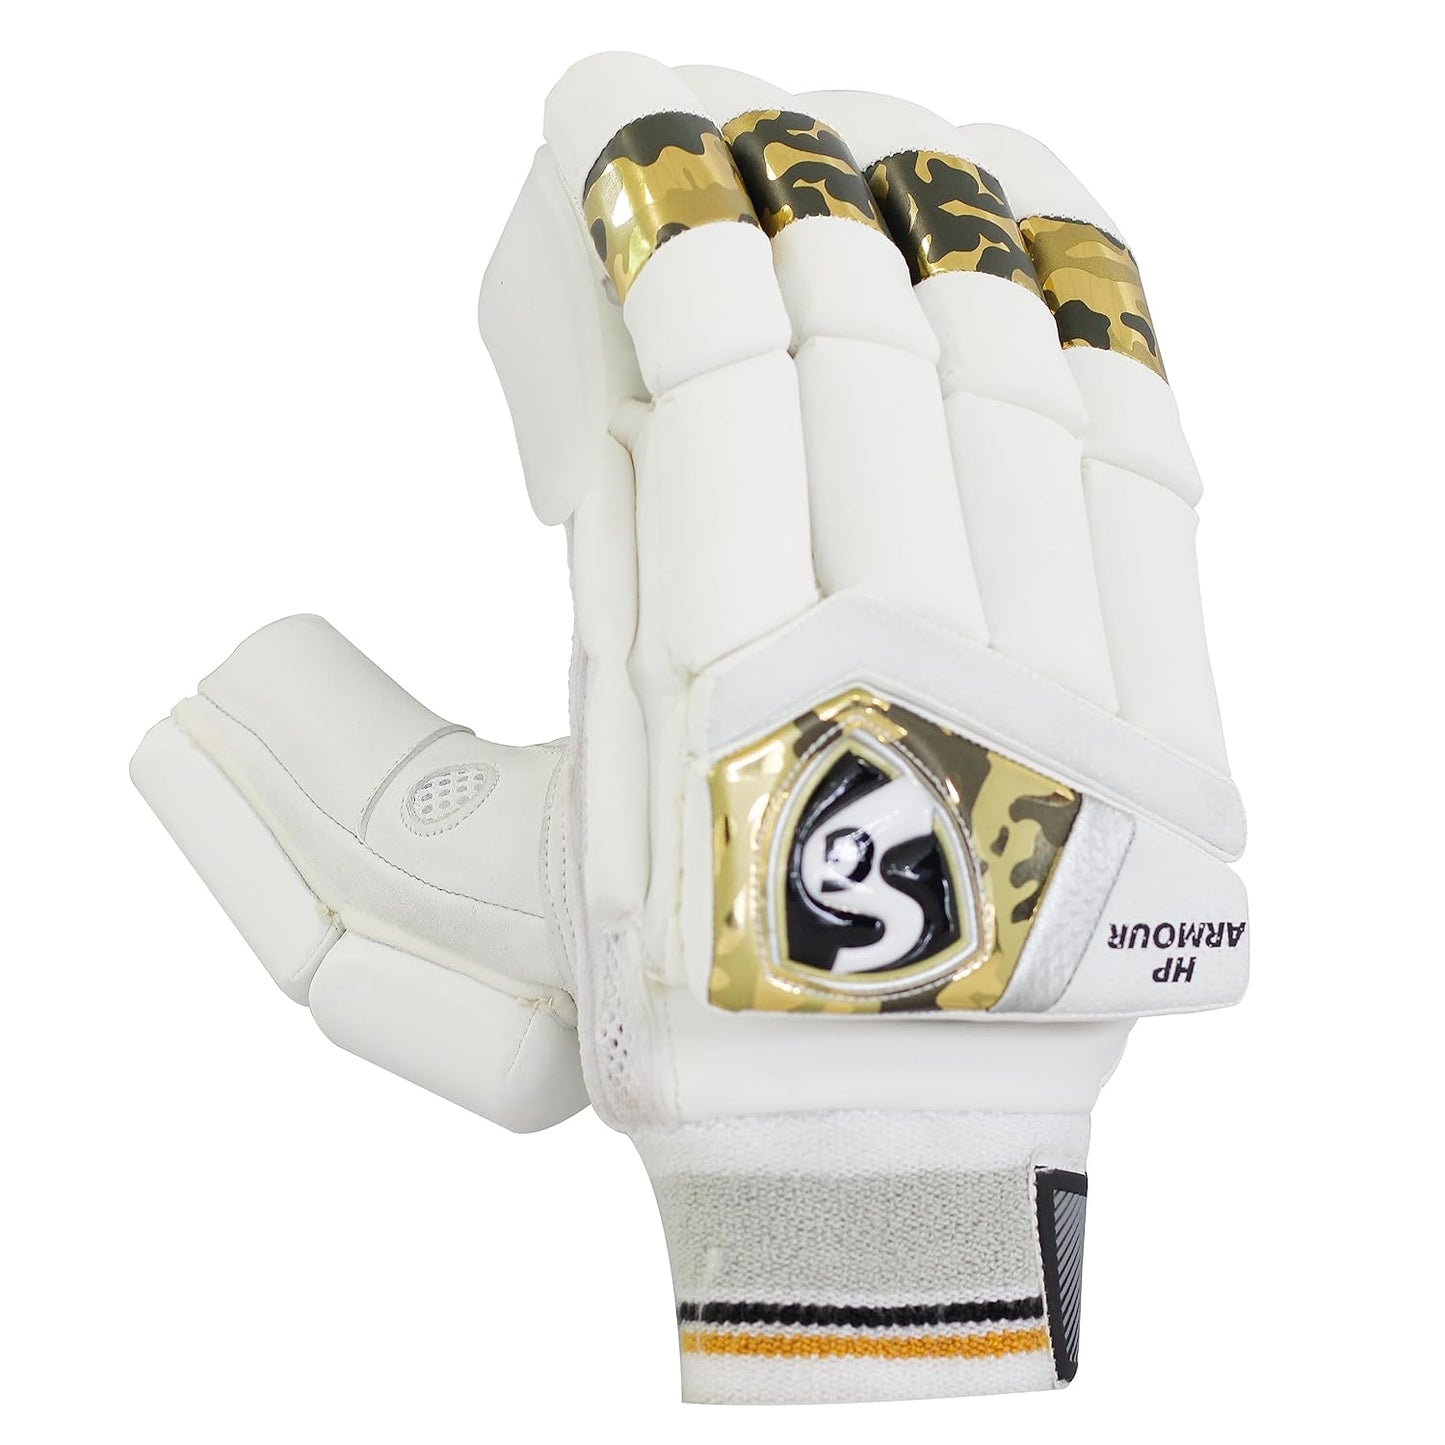 SG HP Armour RH Batting Gloves - Best Price online Prokicksports.com